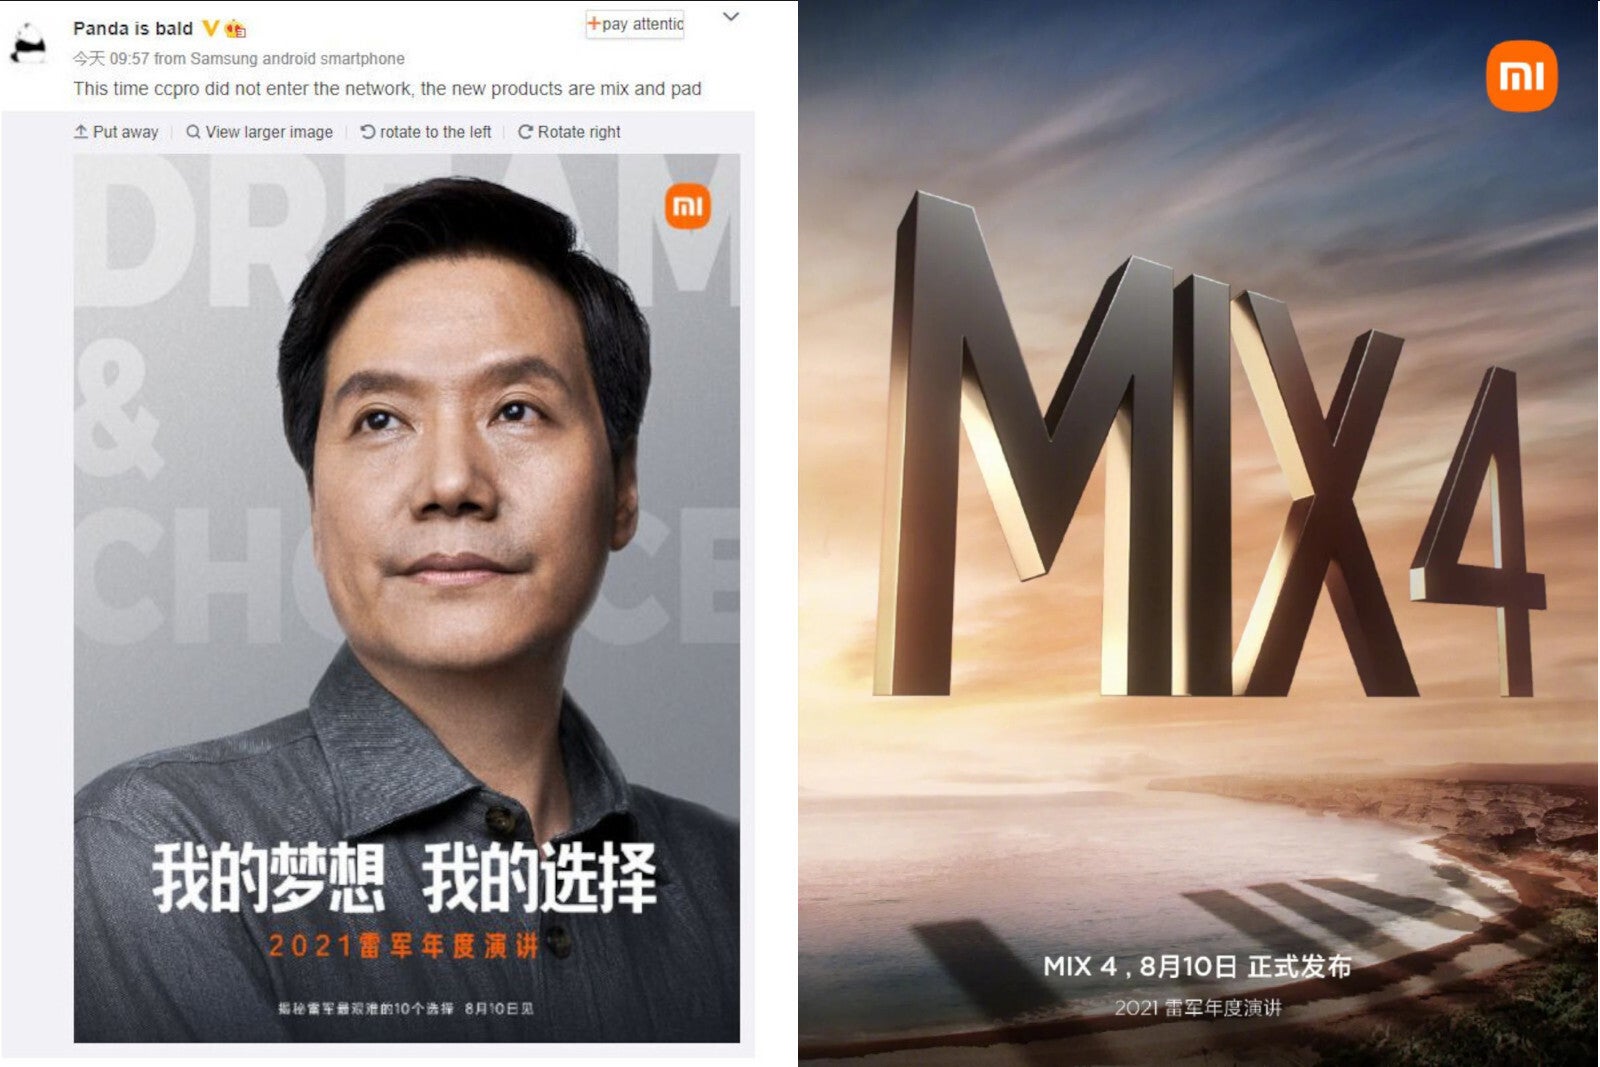 Xiaomi confirms launch of Mi Mix 4, new tablets next week